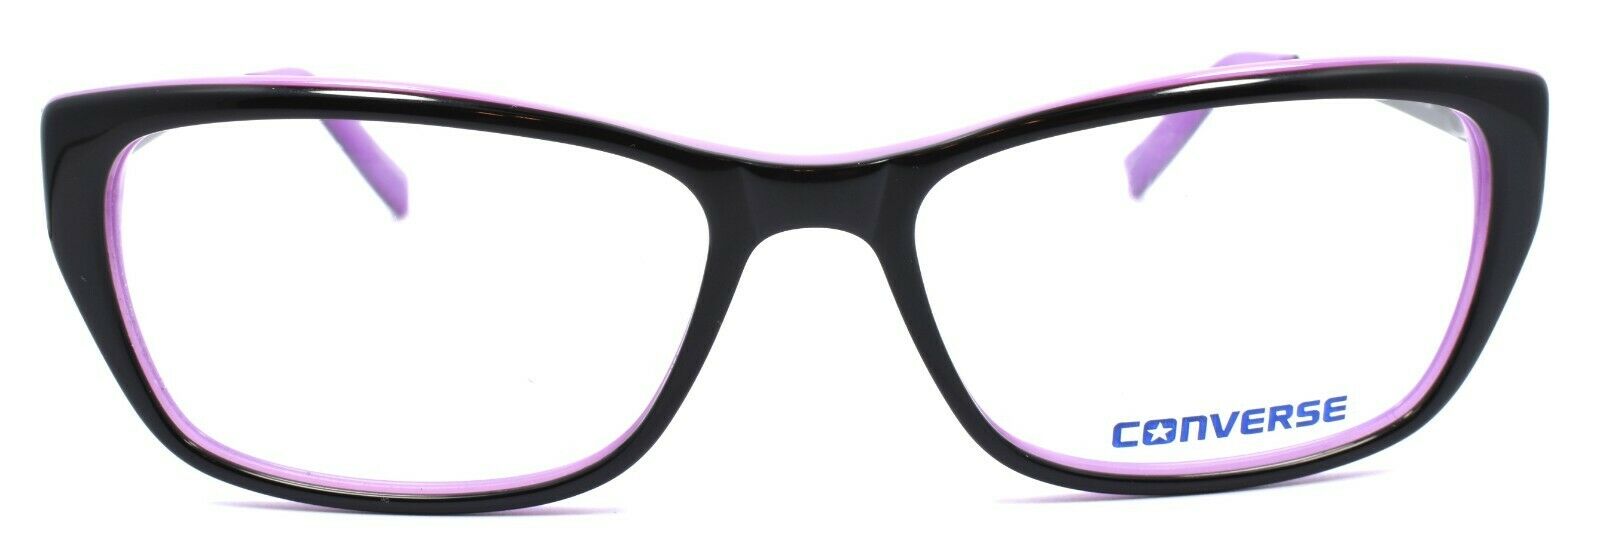 2-CONVERSE Q020 UF Women's Eyeglasses Frames 51-15-135 Black + CASE-751286264906-IKSpecs